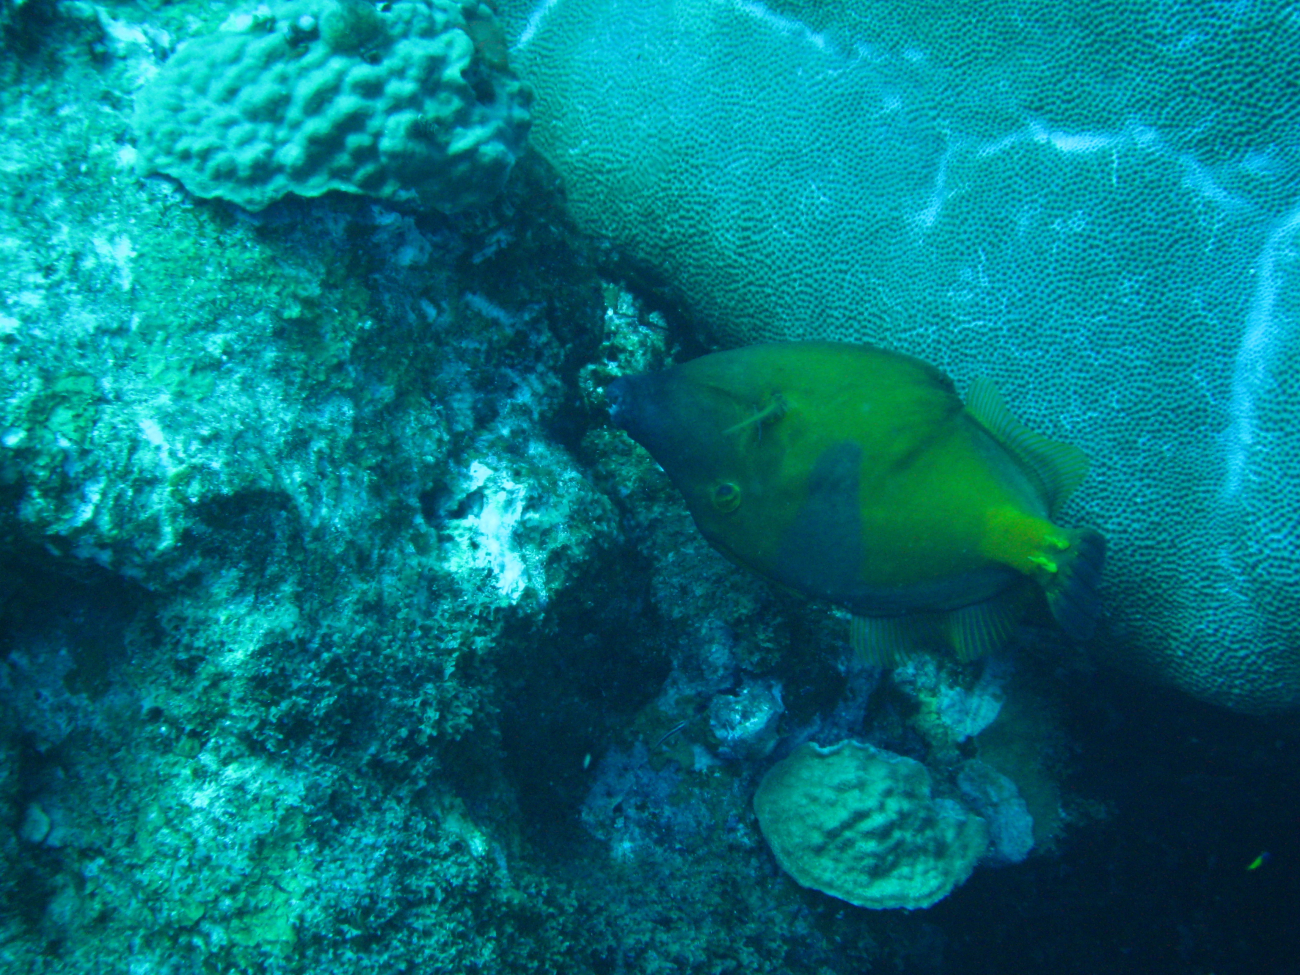 American whitespotted filefish swimming upside down